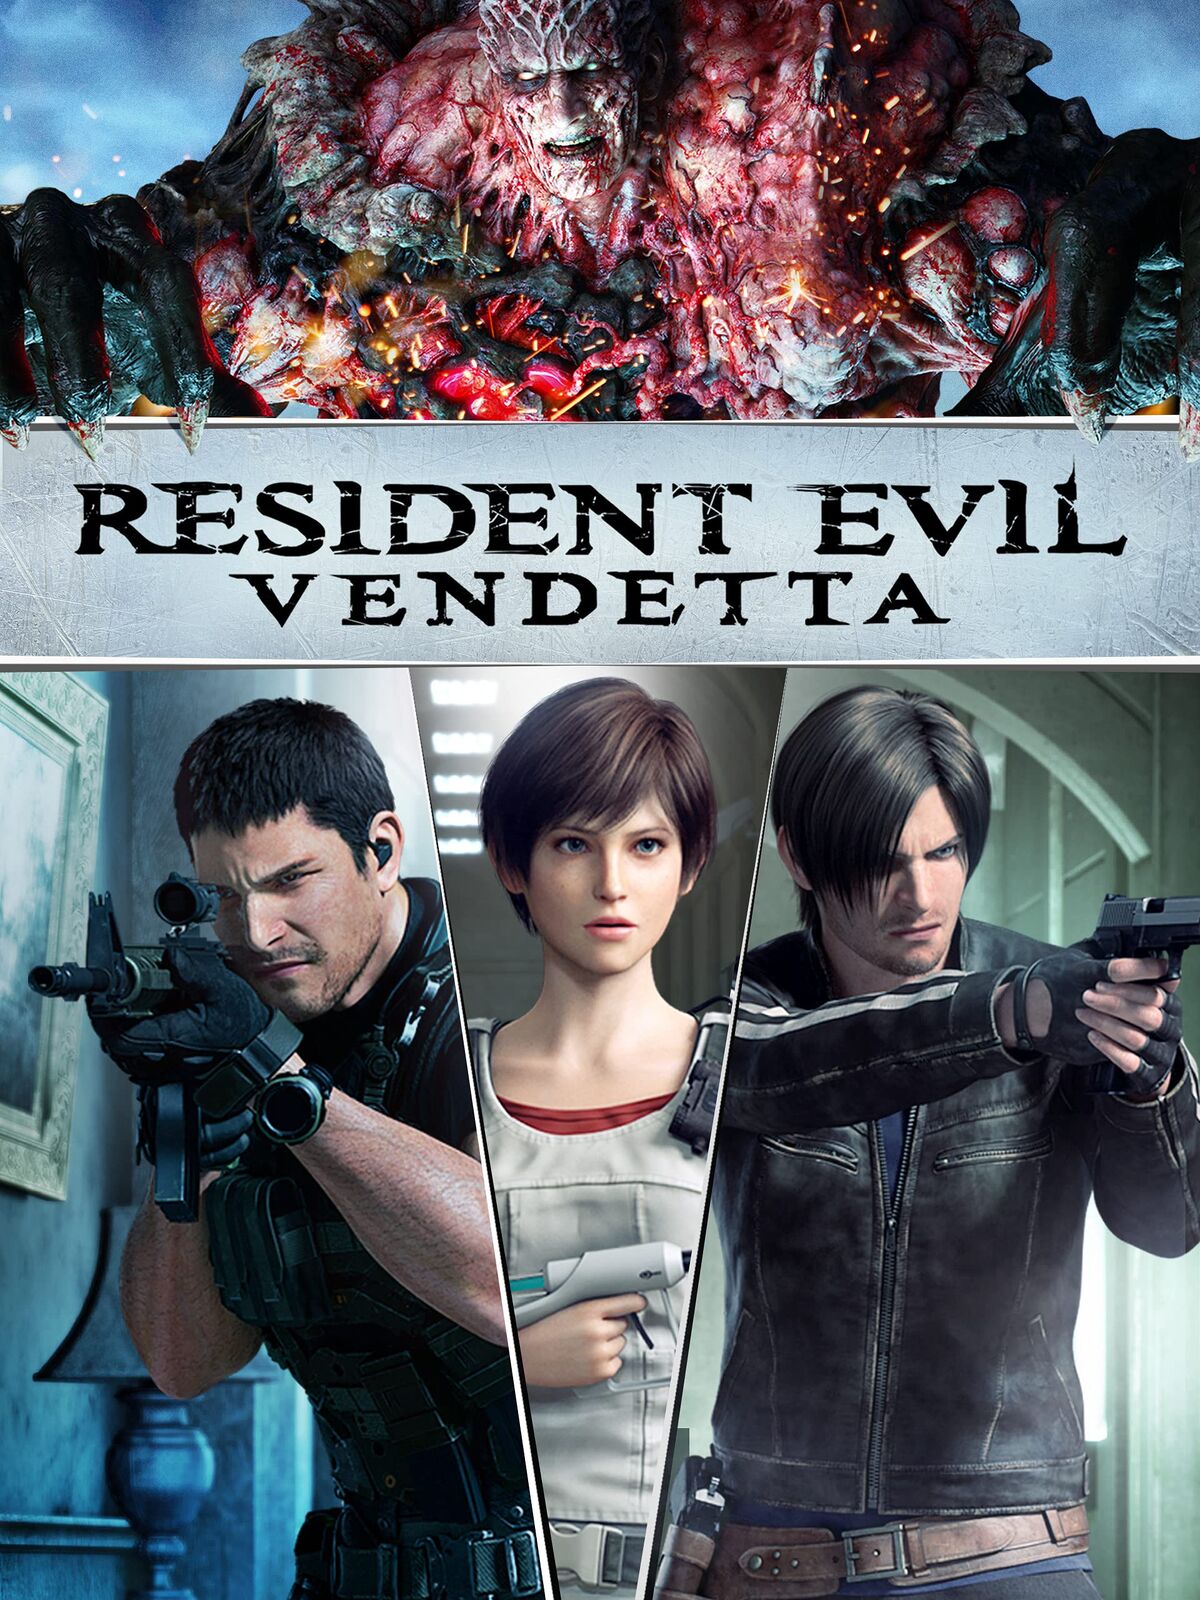 Resident Evil Revelations  ALL CUTSCENES TRUEHD QUALITY  YouTube